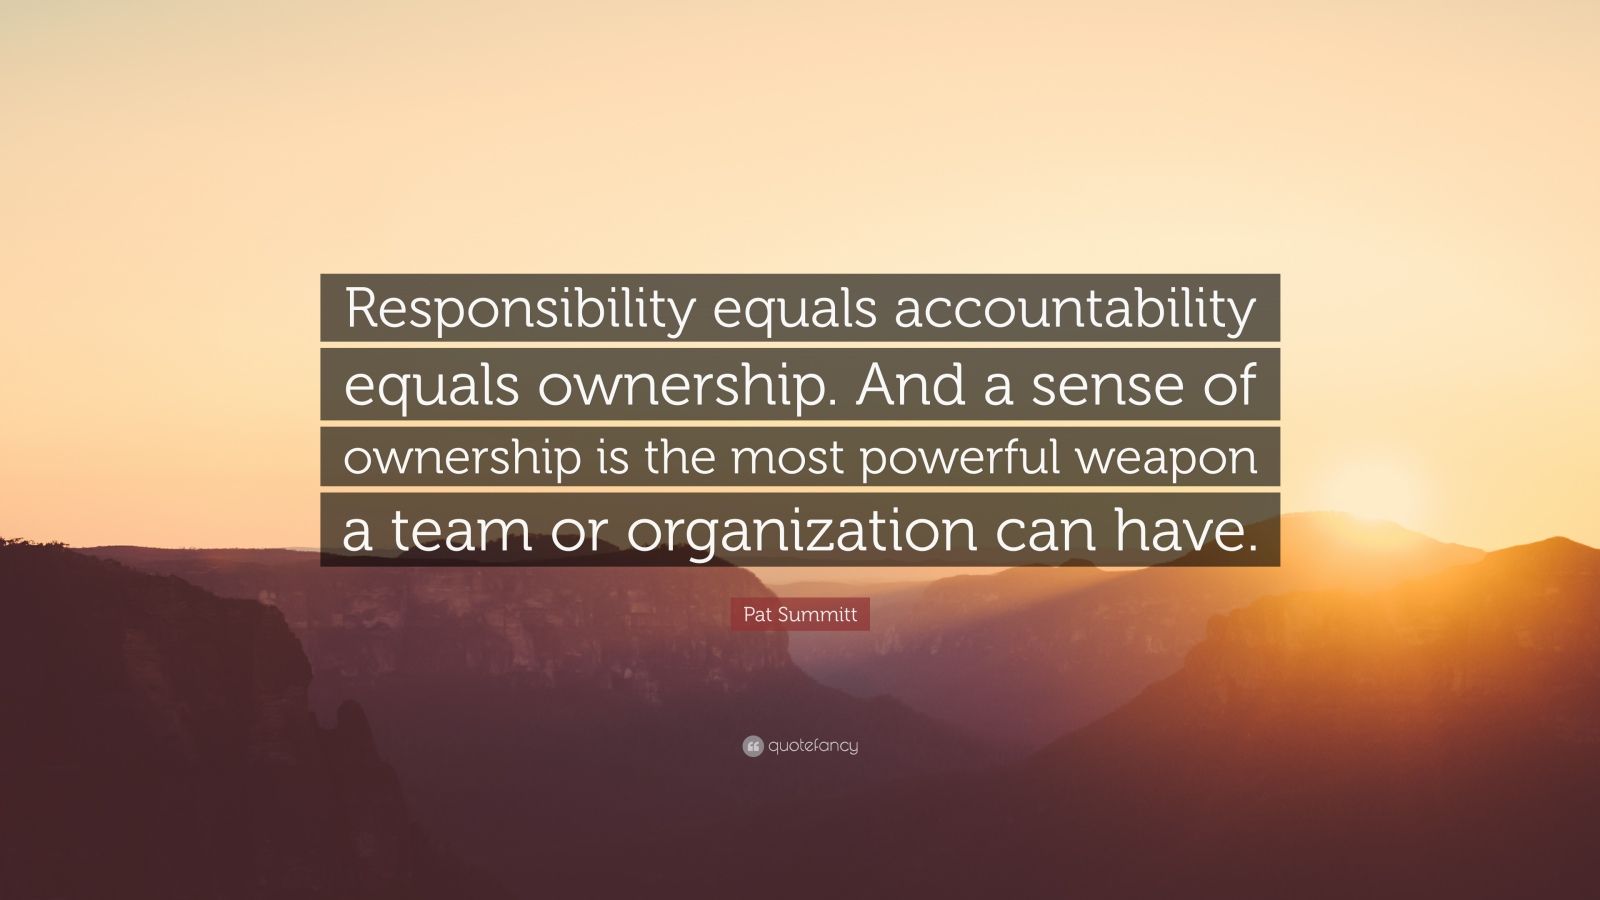 Pat Summitt Quote: “Responsibility equals accountability equals